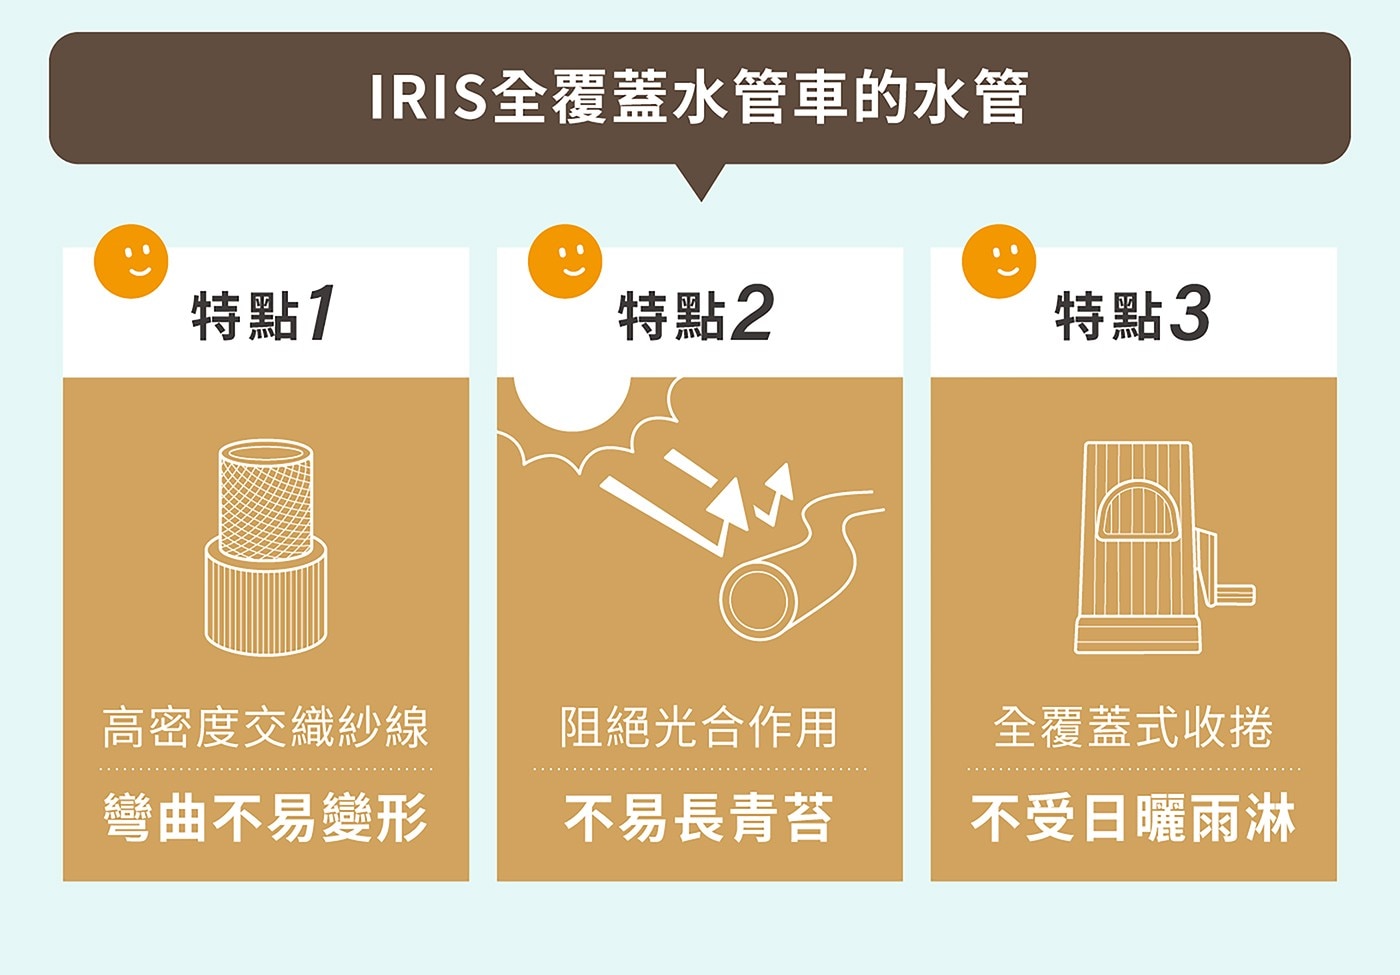 IRIS OHYAMA 全罩式水管車 產品介紹